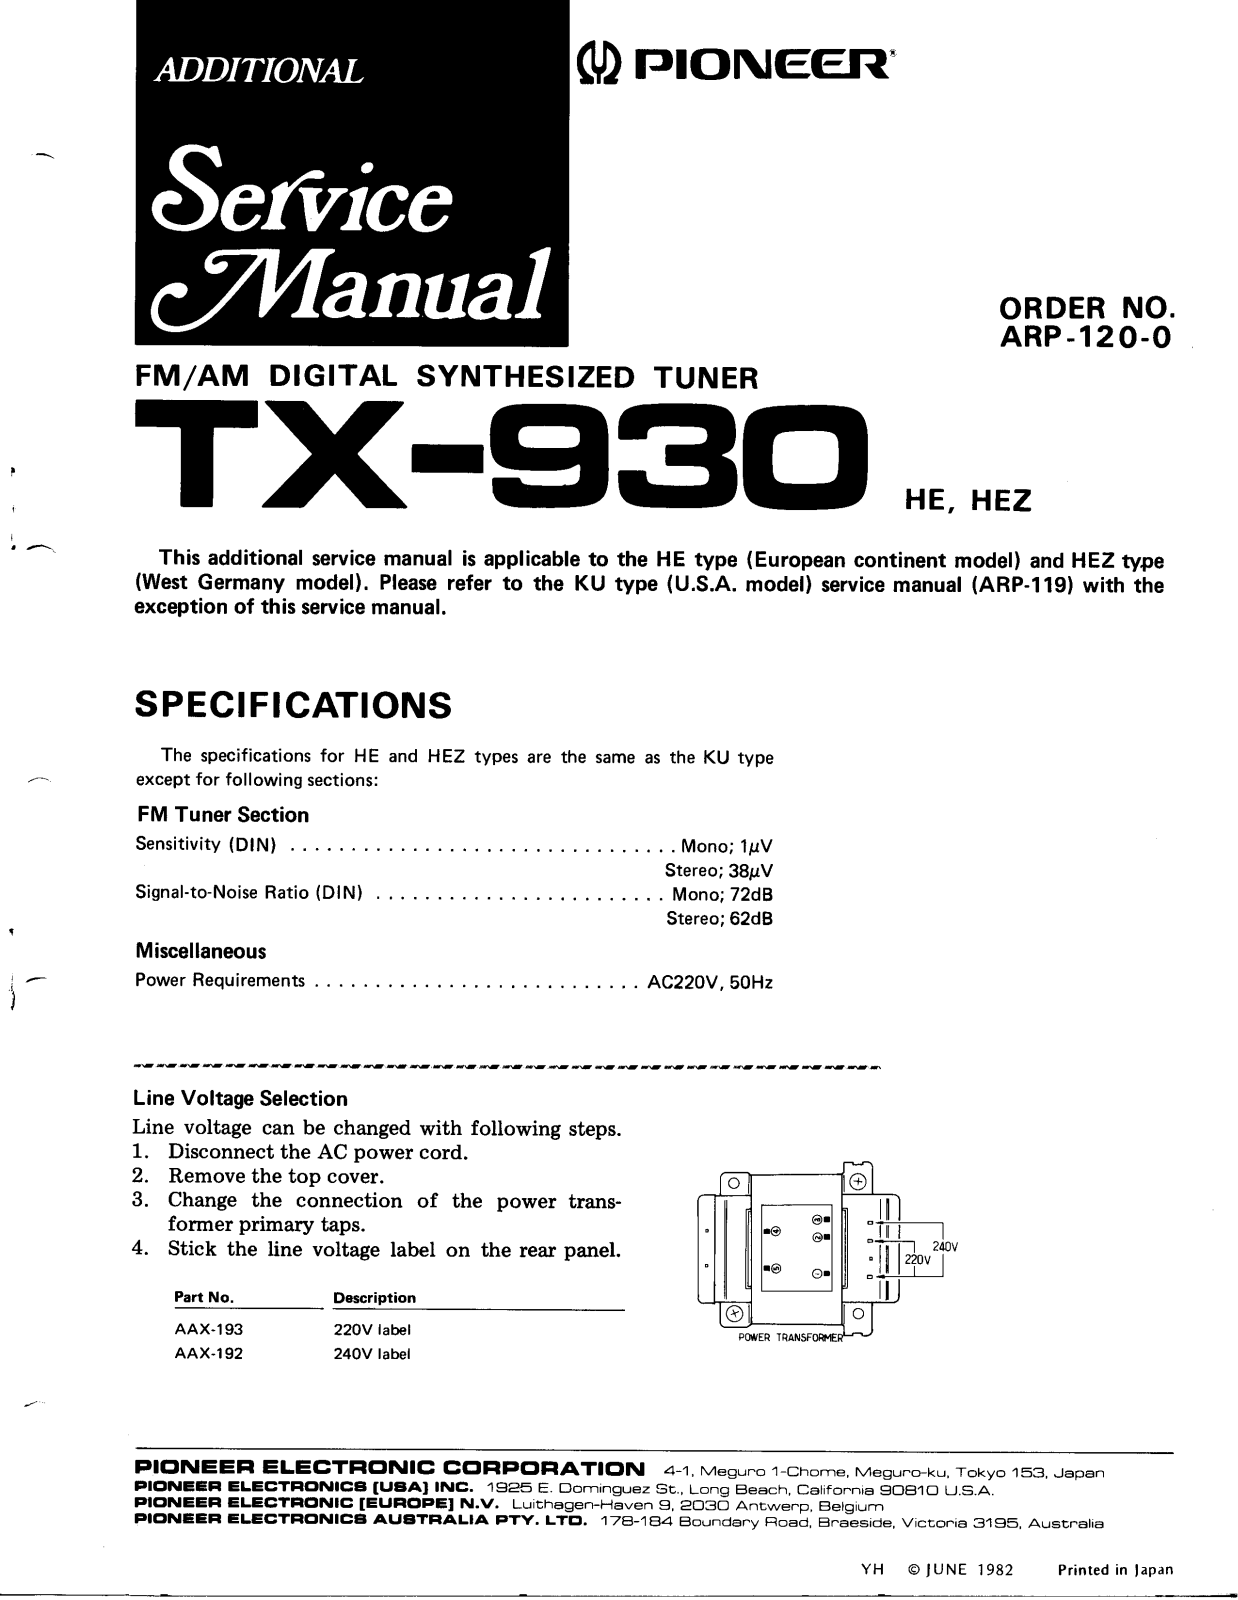 Pioneer TX-930 Service manual